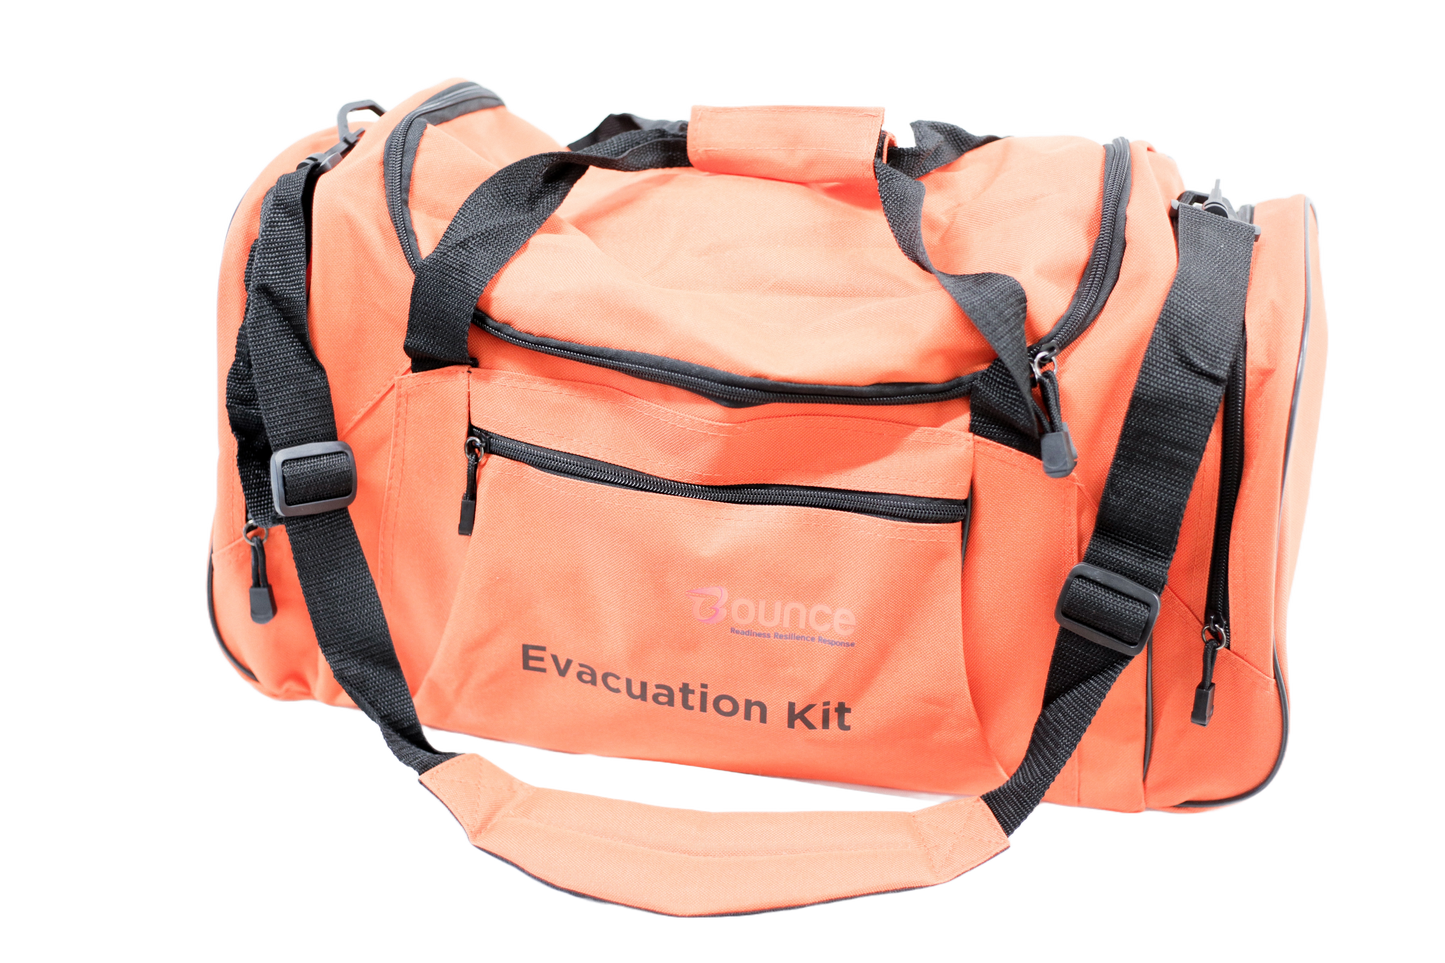 Evacuation Kit